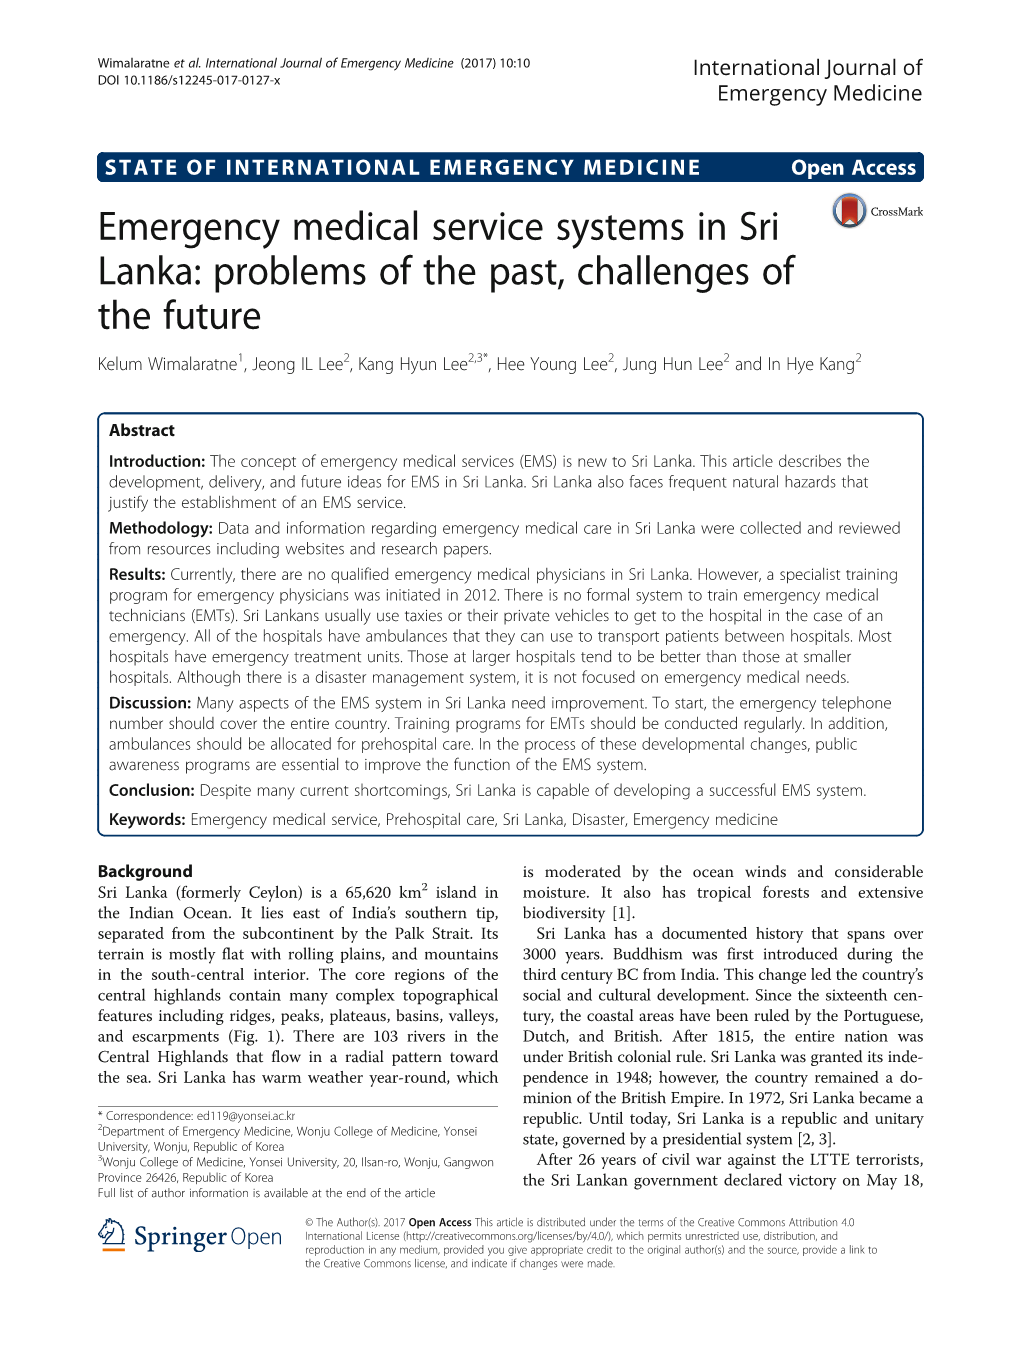 Emergency Medical Service Systems in Sri Lanka